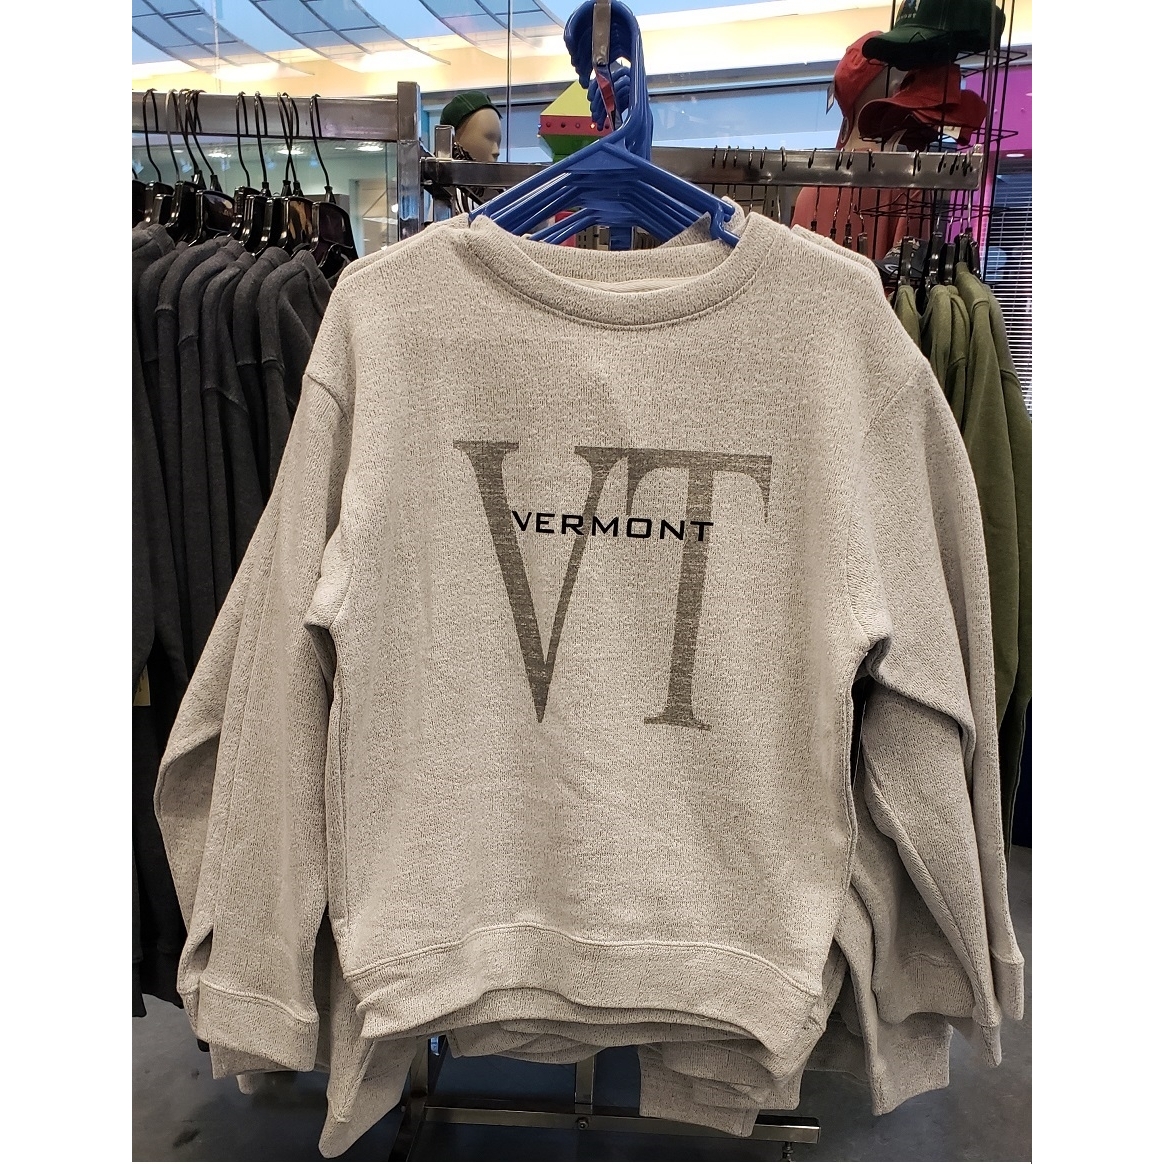 LoVermontStore | Vermont and UVM T-shirts, Sweatshirts, Hoodies, Hats ...